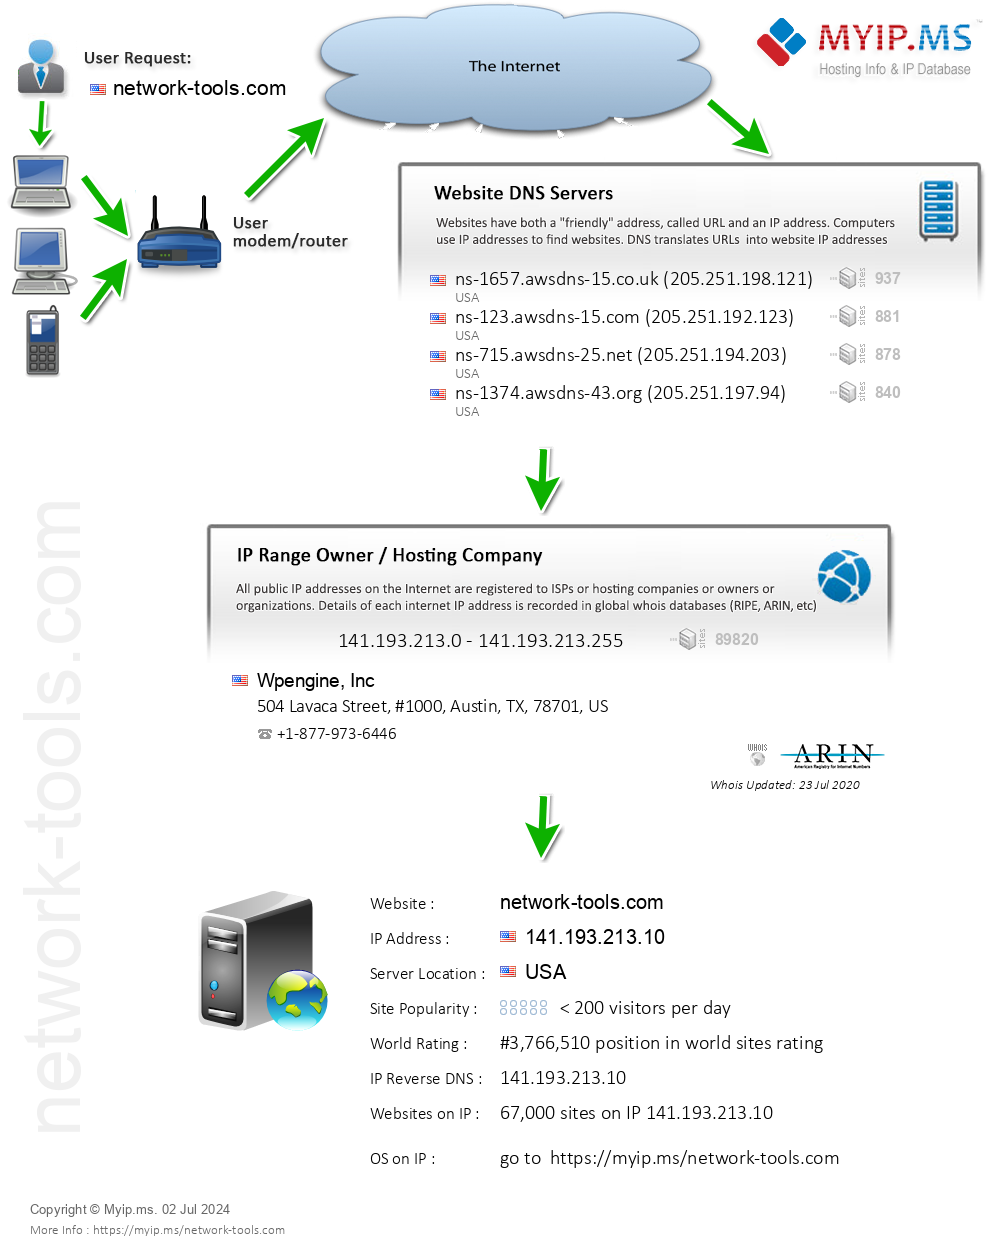 Network-tools.com - Website Hosting Visual IP Diagram